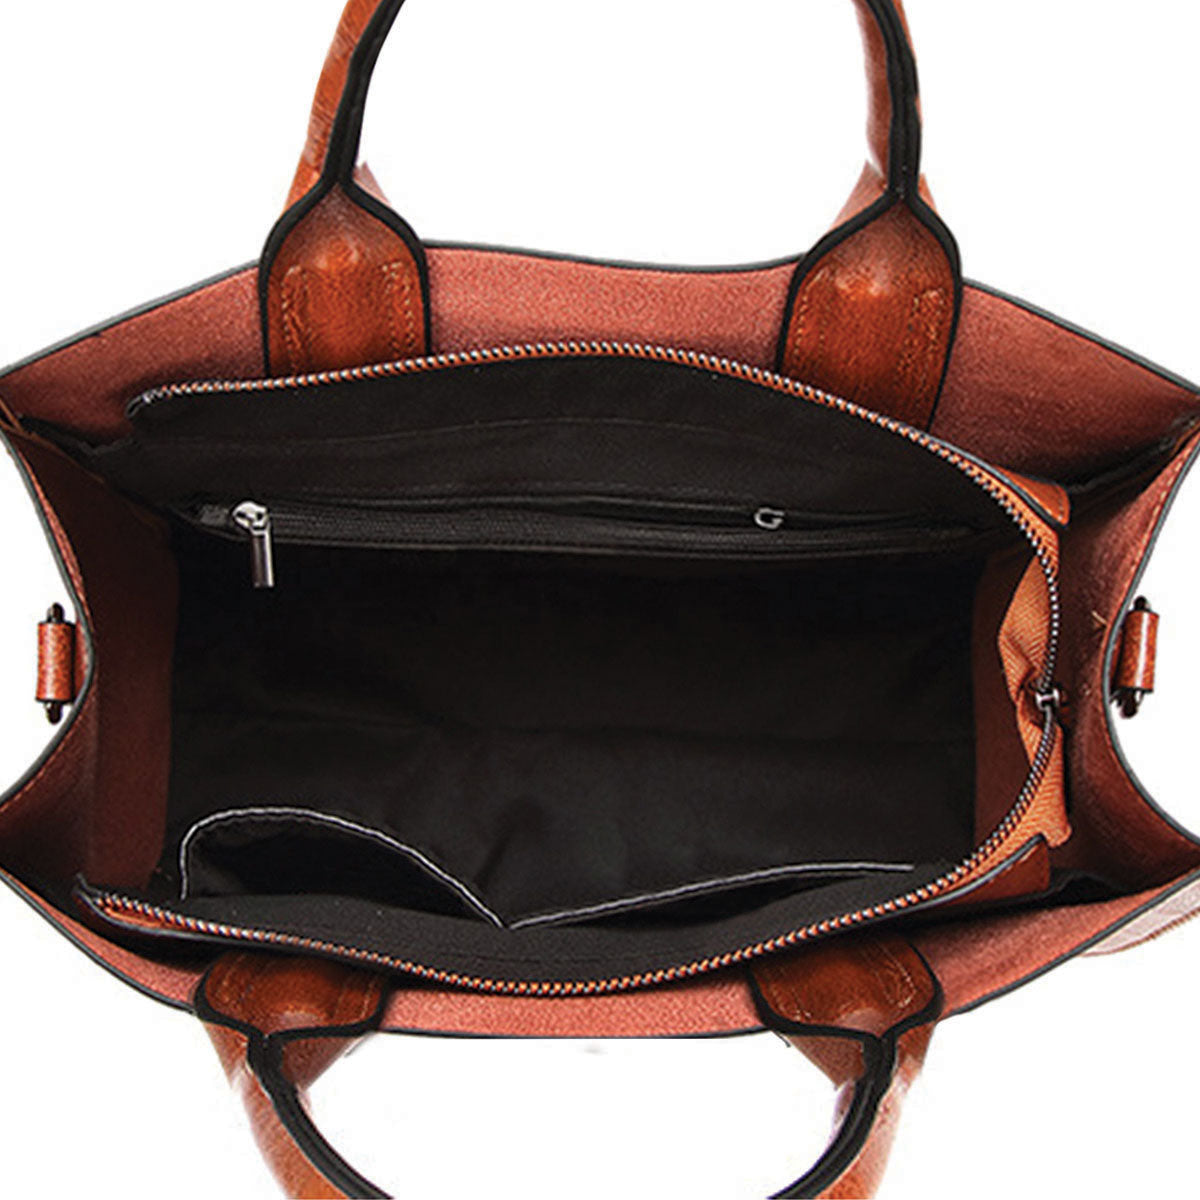 Your Best Companion - Chihuahua Luxury Handbag V2